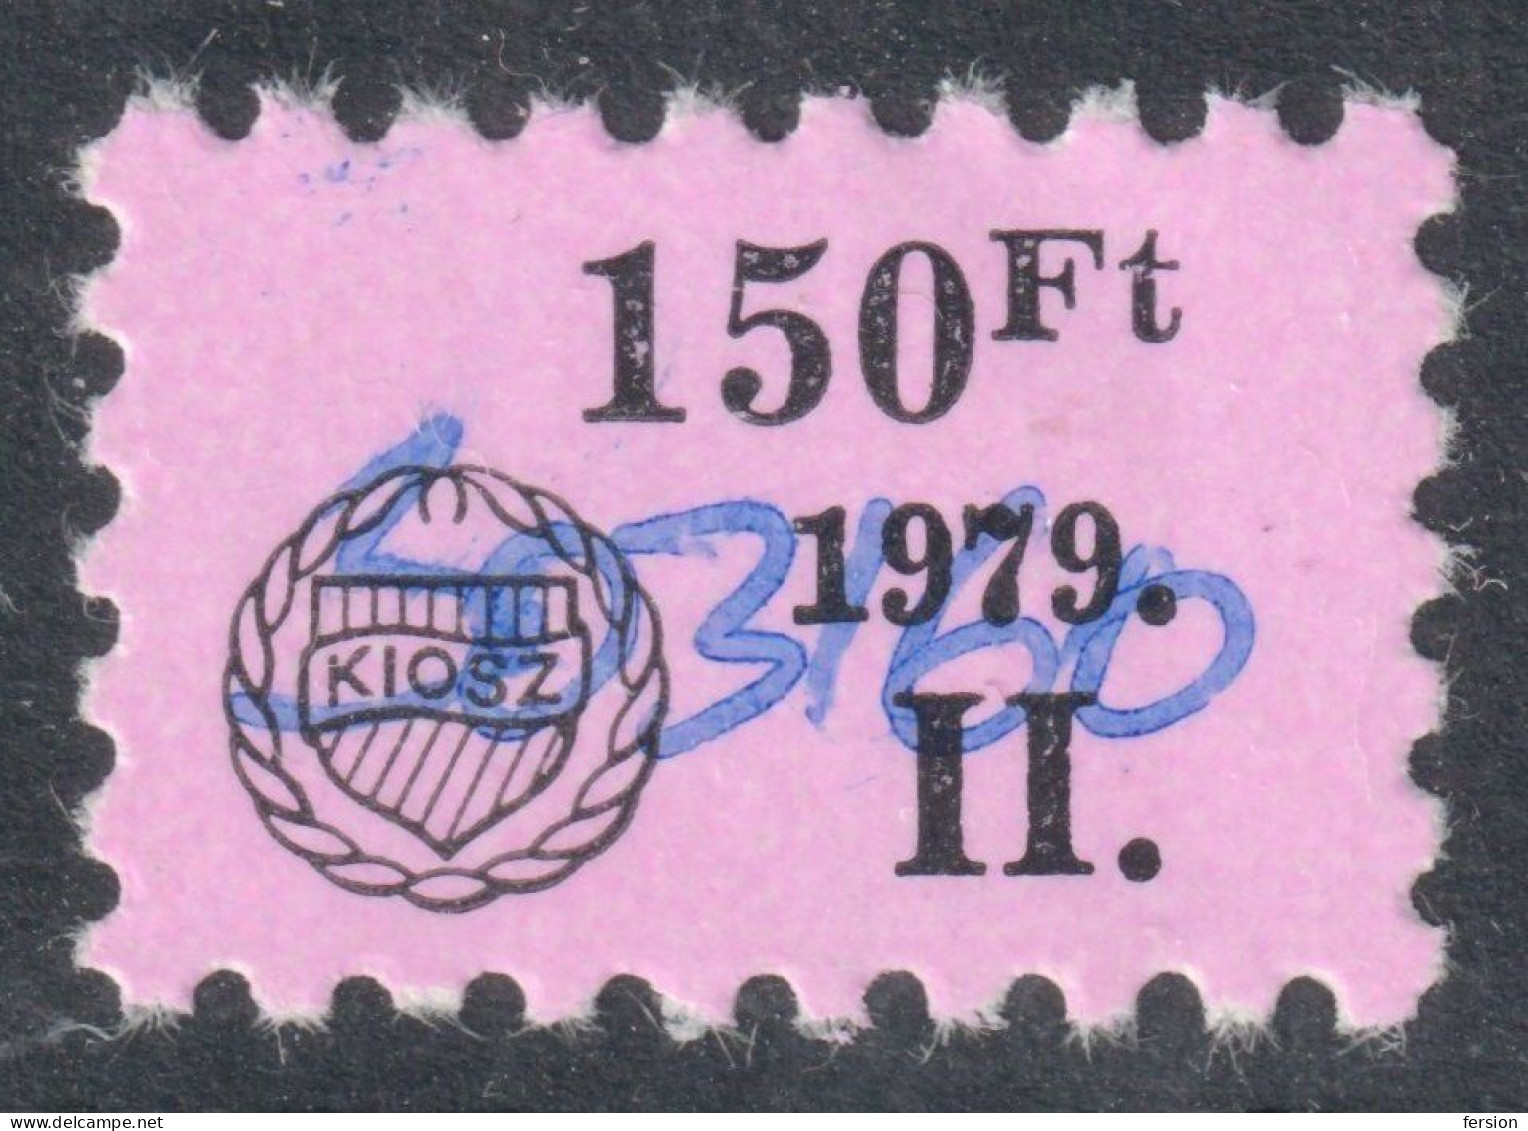 Hungarian Association Of Craftmen - Artisan KIOSZ / Charity Aid Member Label / Vignette / Cinderella - Used 1979 HUNGARY - Oficiales